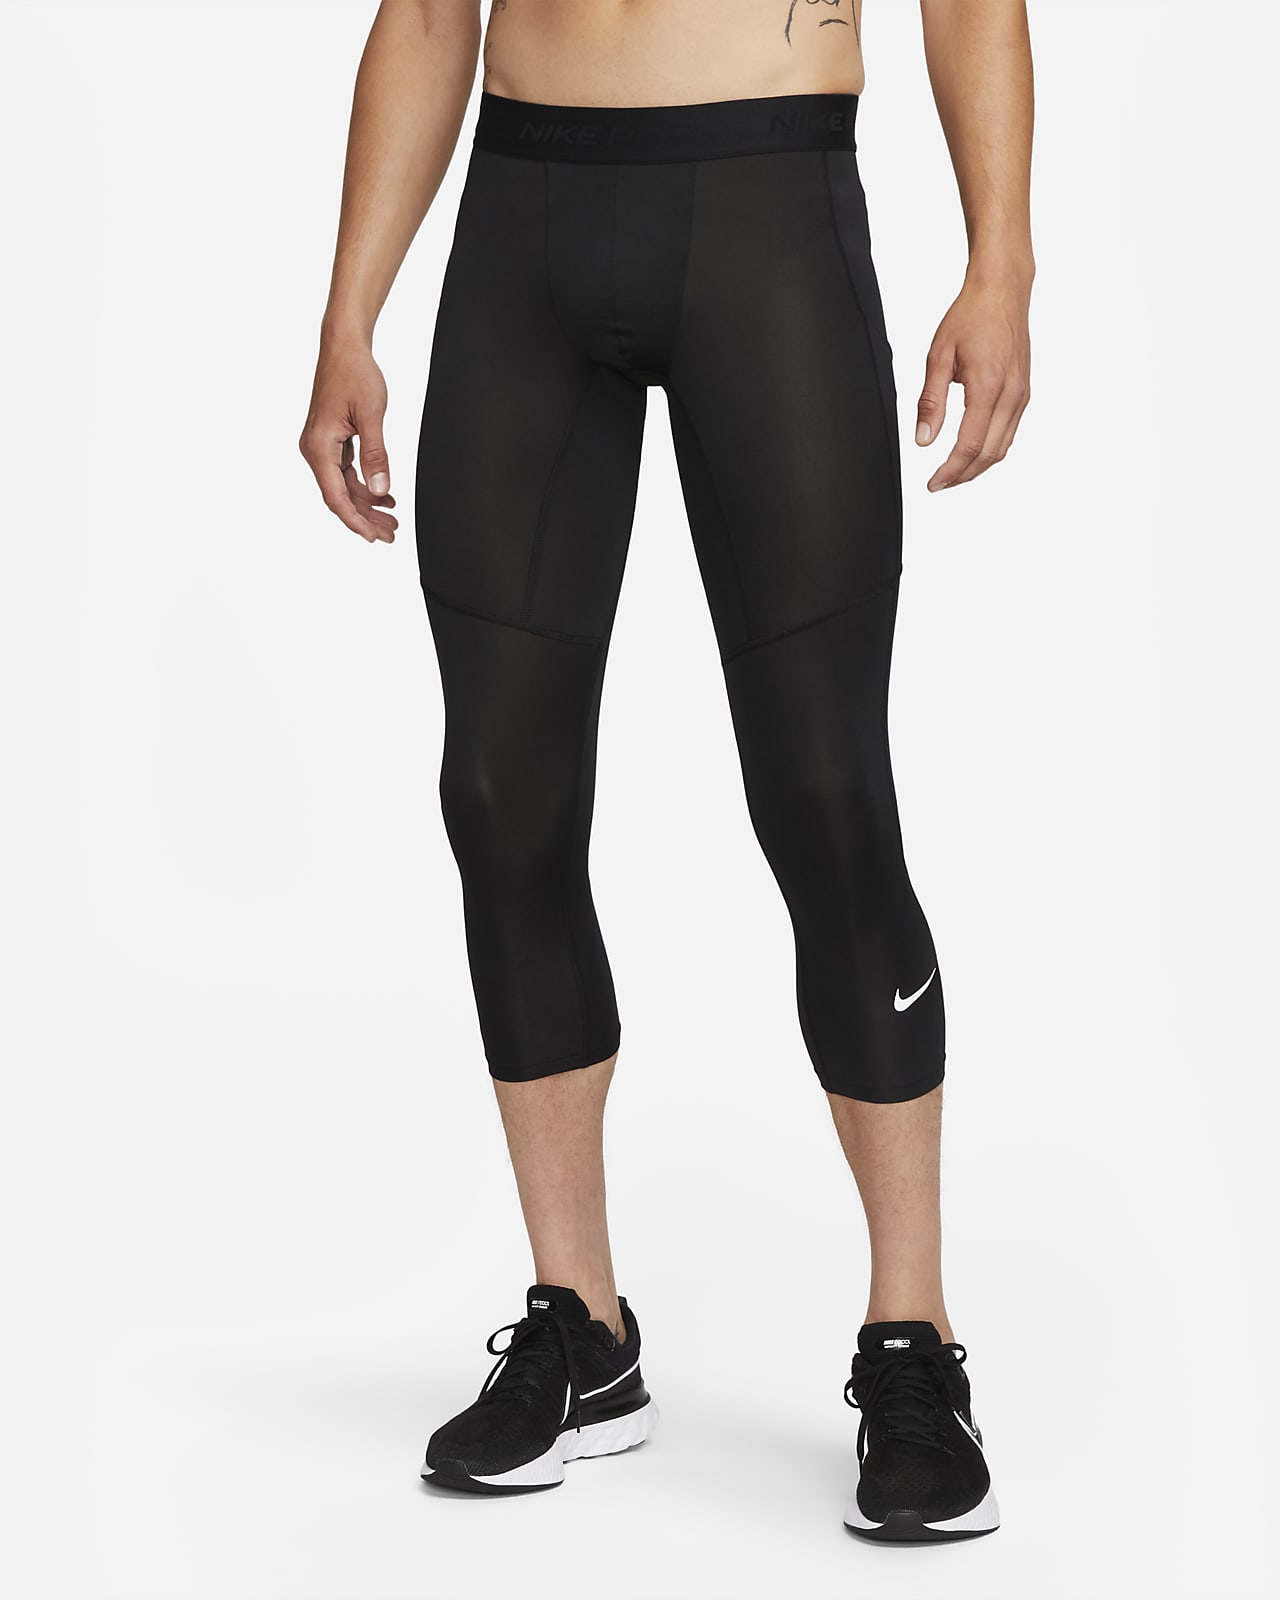 Legging Nike Pro Cool Cinza - Compre Agora